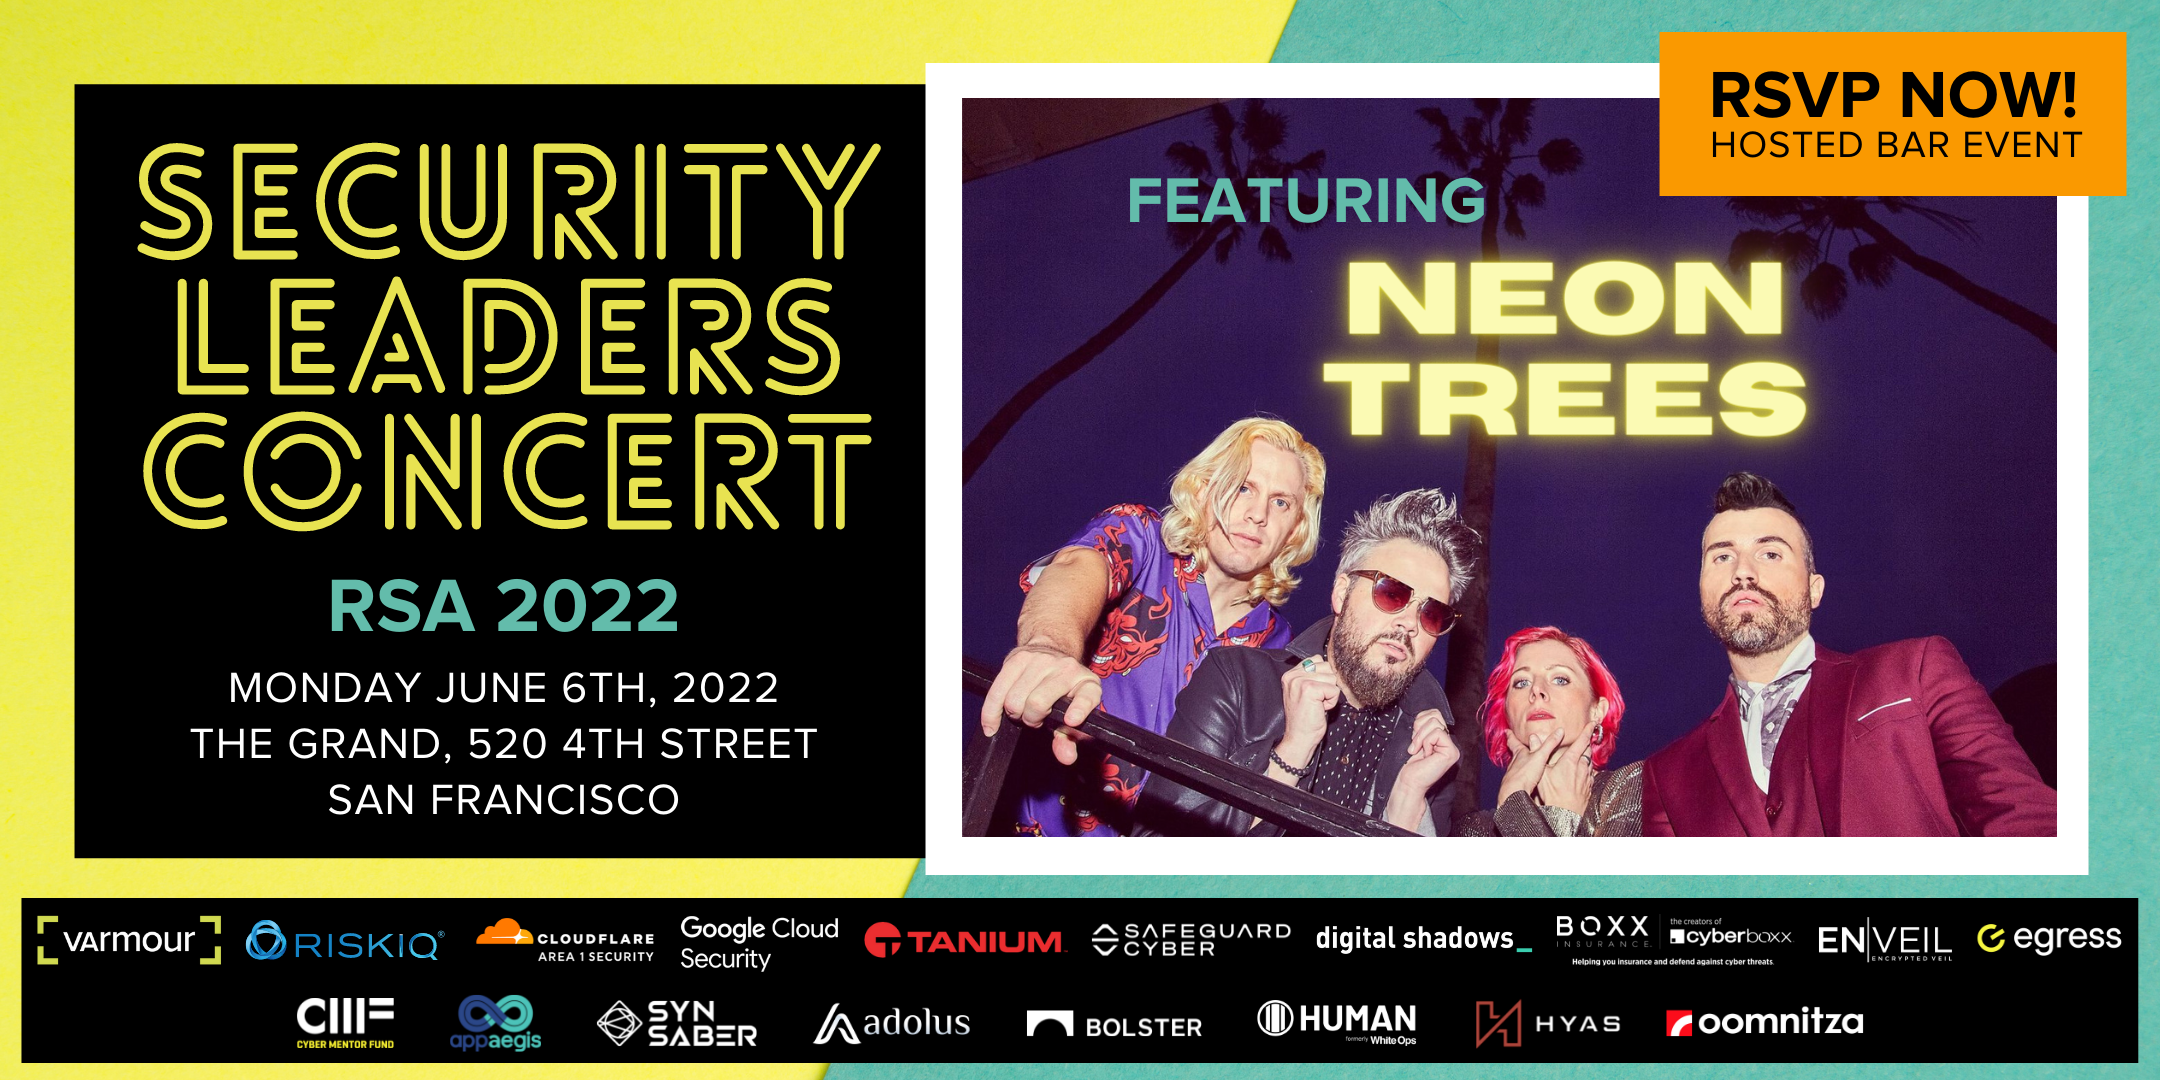 Security Leaders Concert: Neon Trees